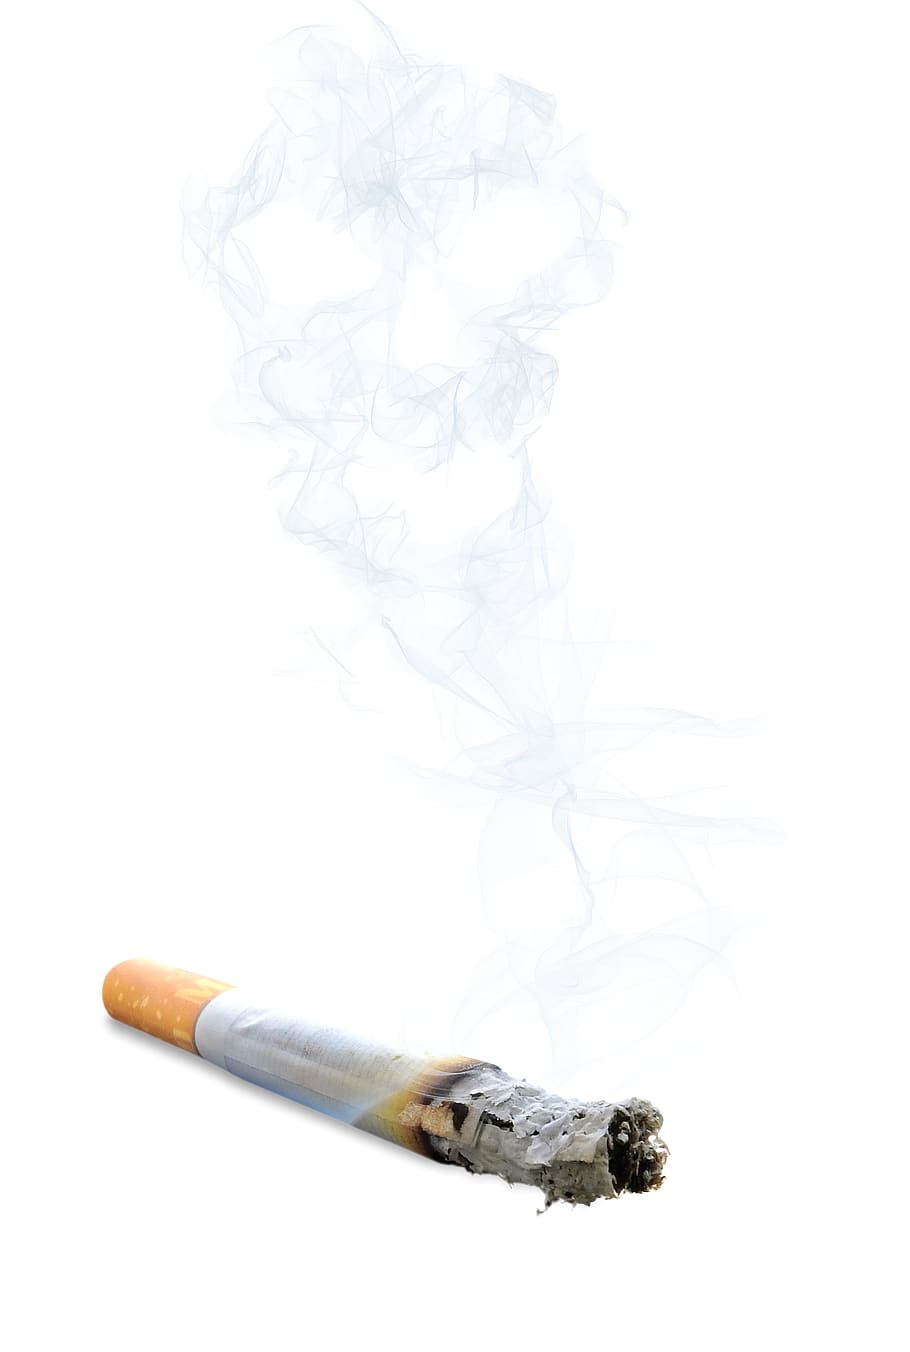 cigarette, smoking, smoke, embers, ash, death, skull and crossbones, addiction, unhealthy, warning sign